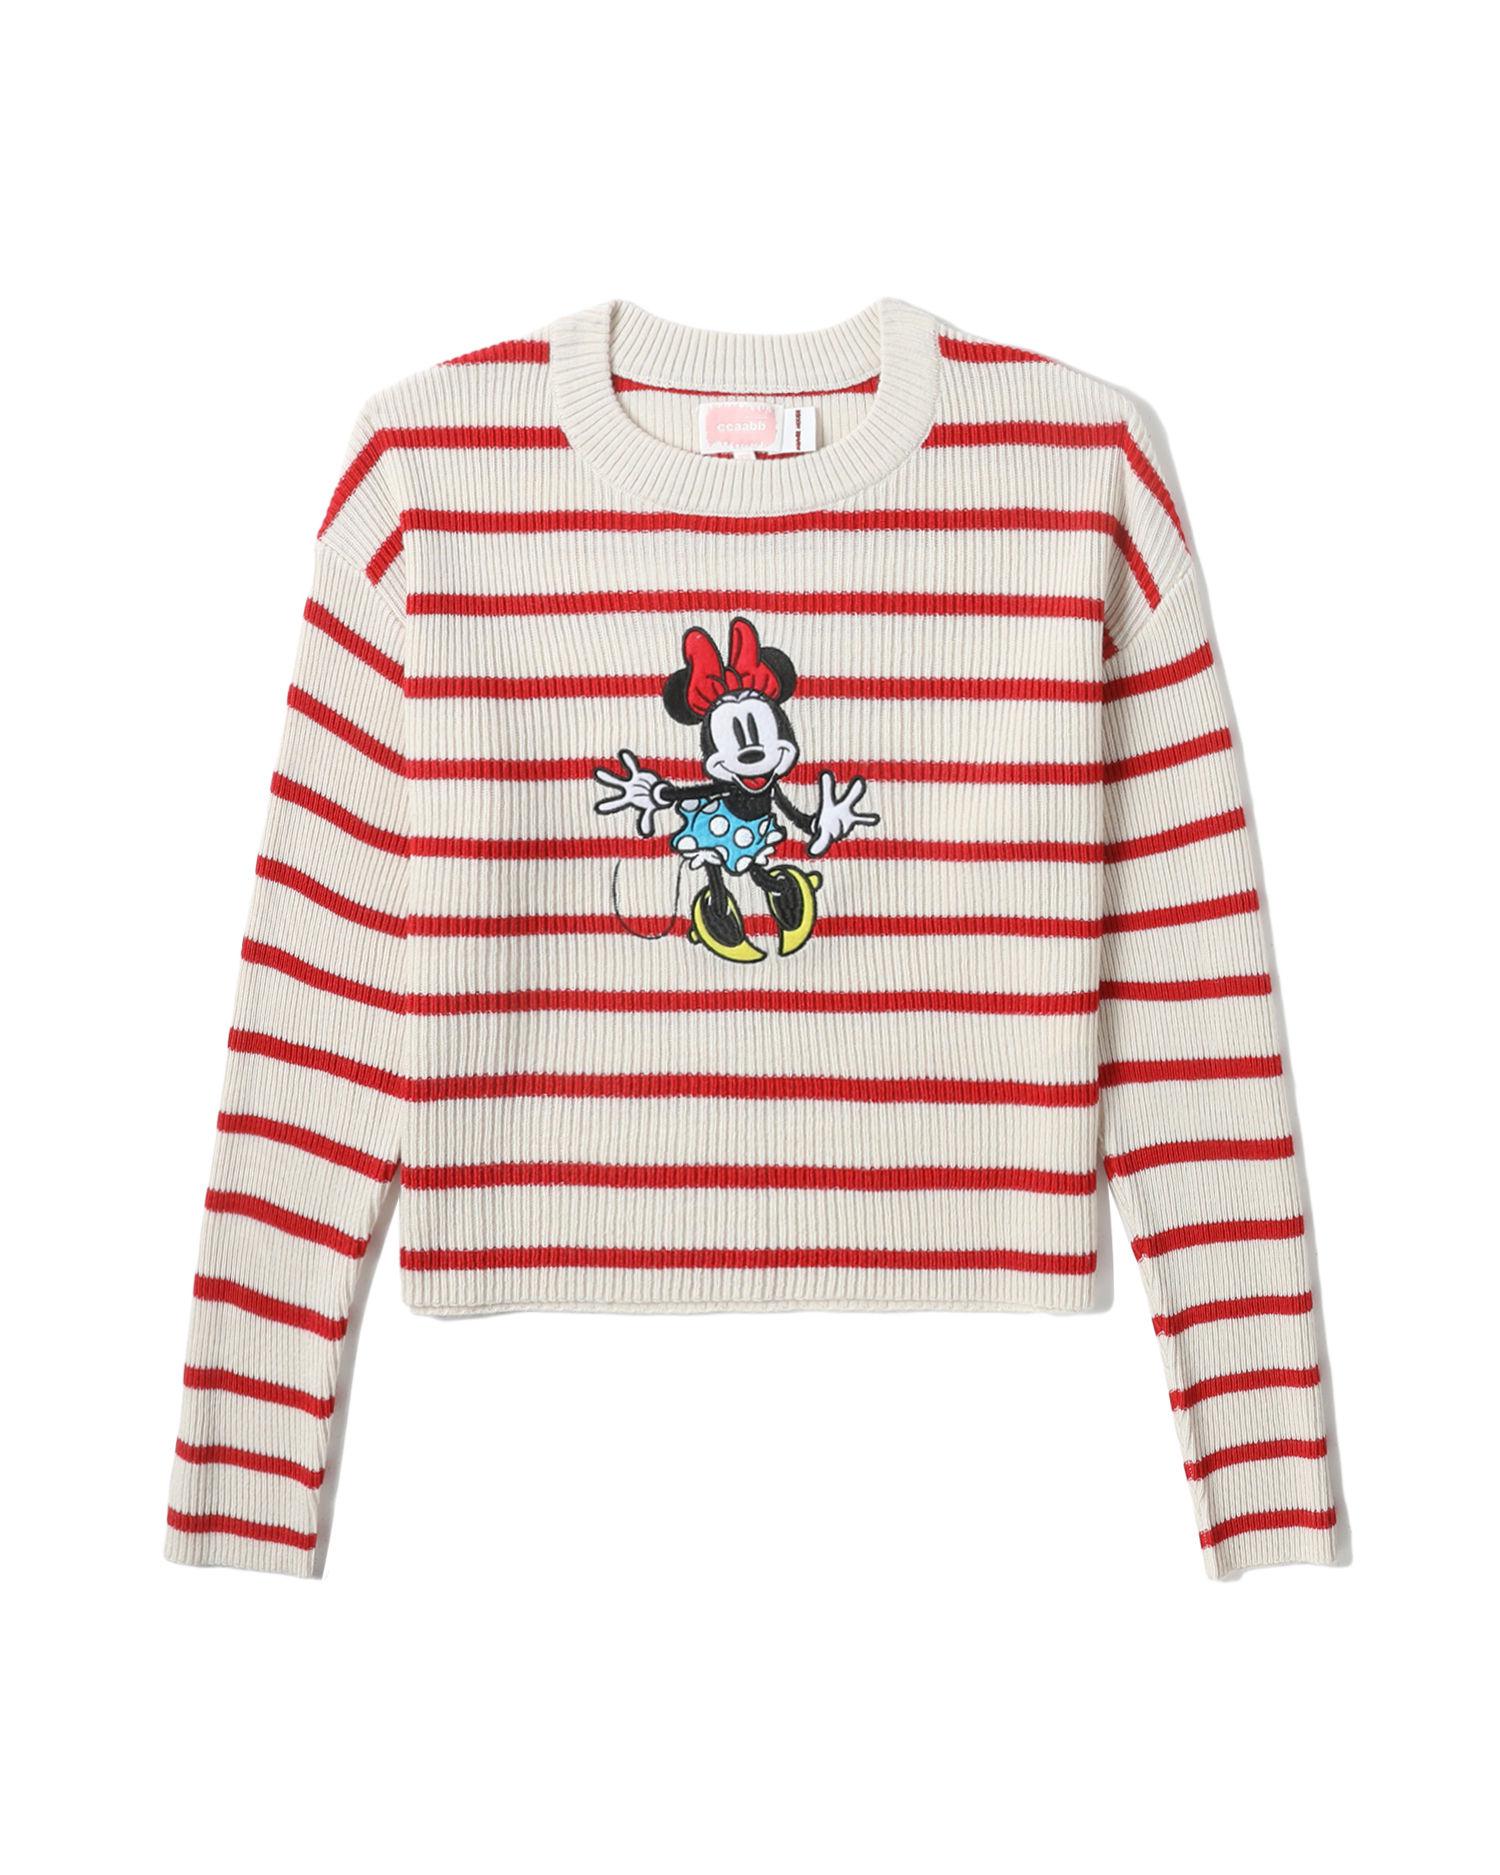 X Disney Minnie Mouse striped knit top by CCAABB